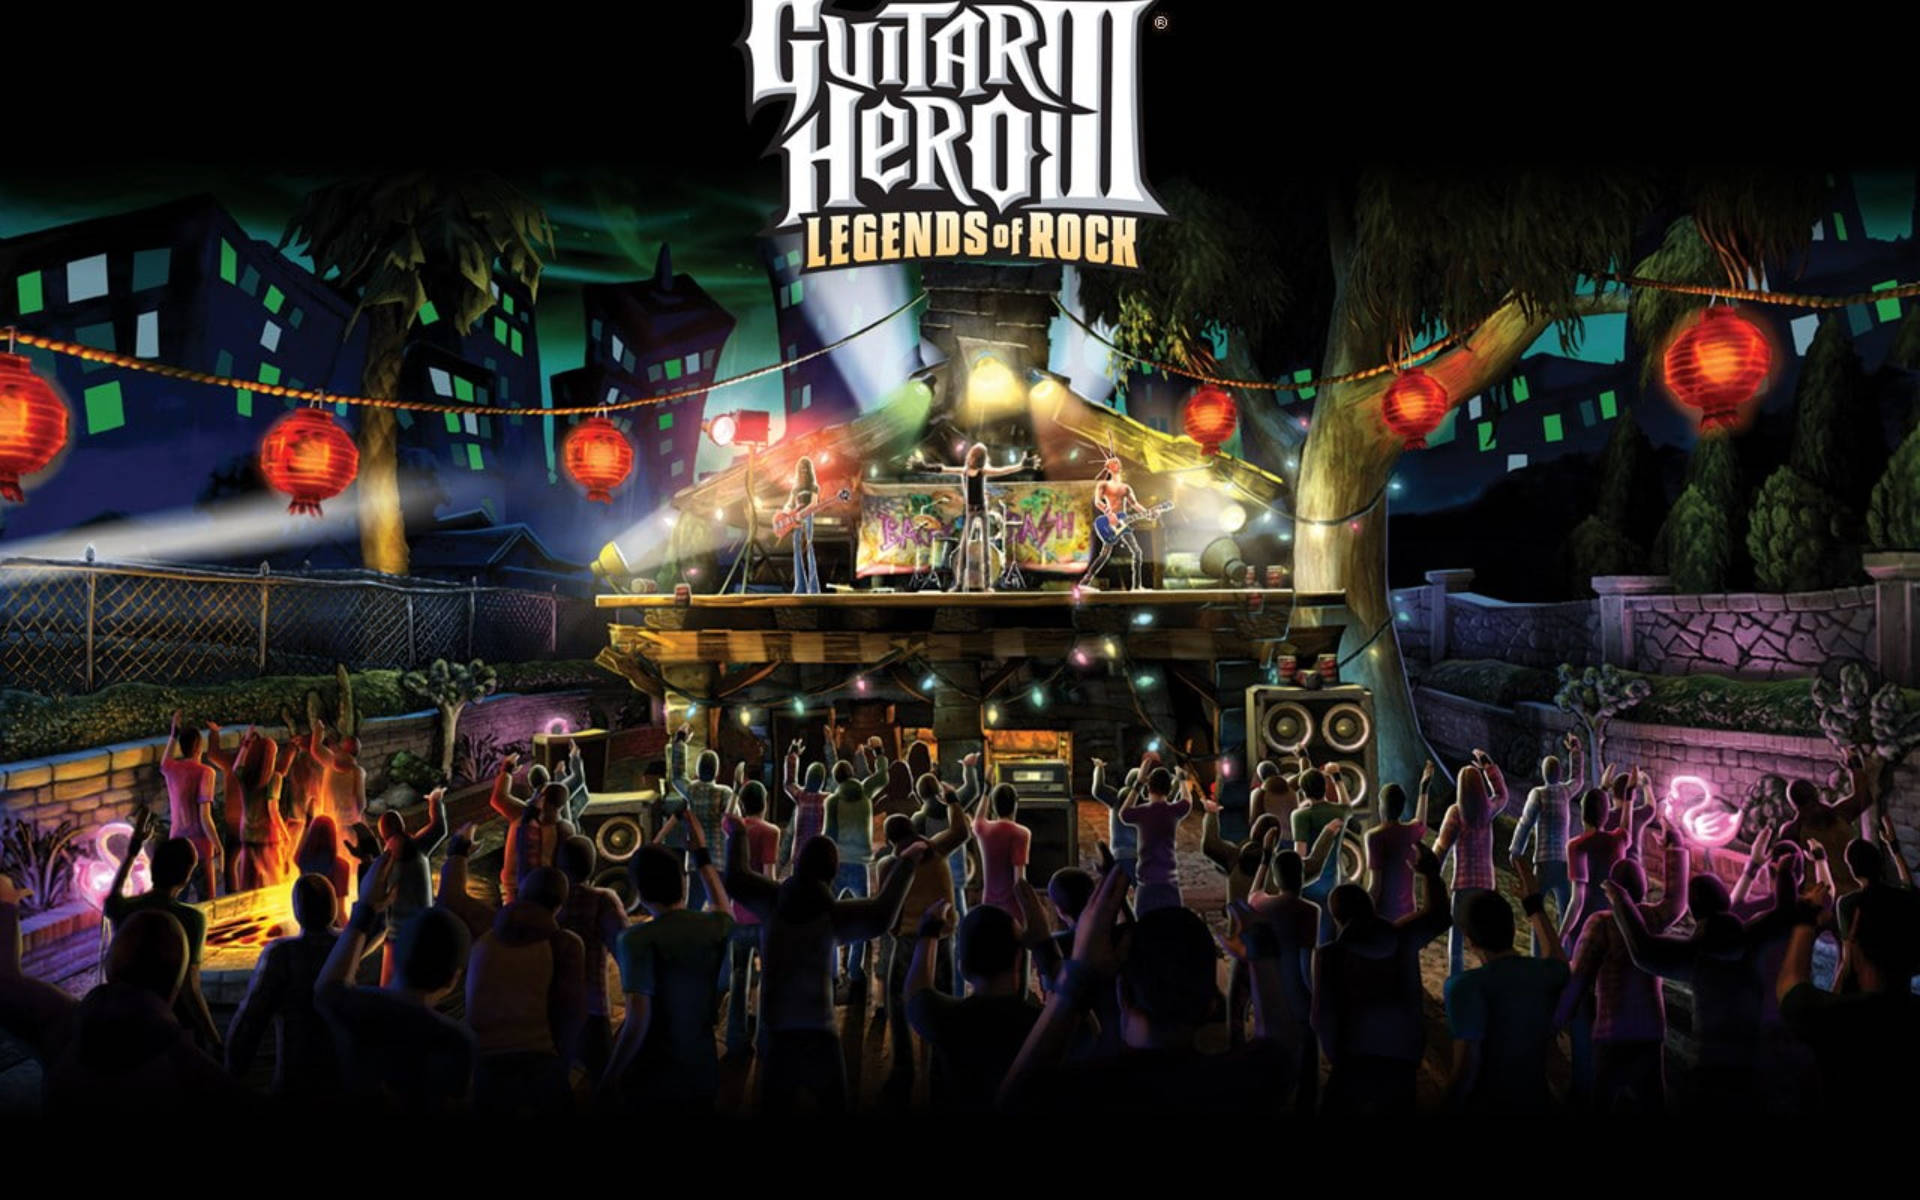 Guitar Hero 3 Concert Poster Background